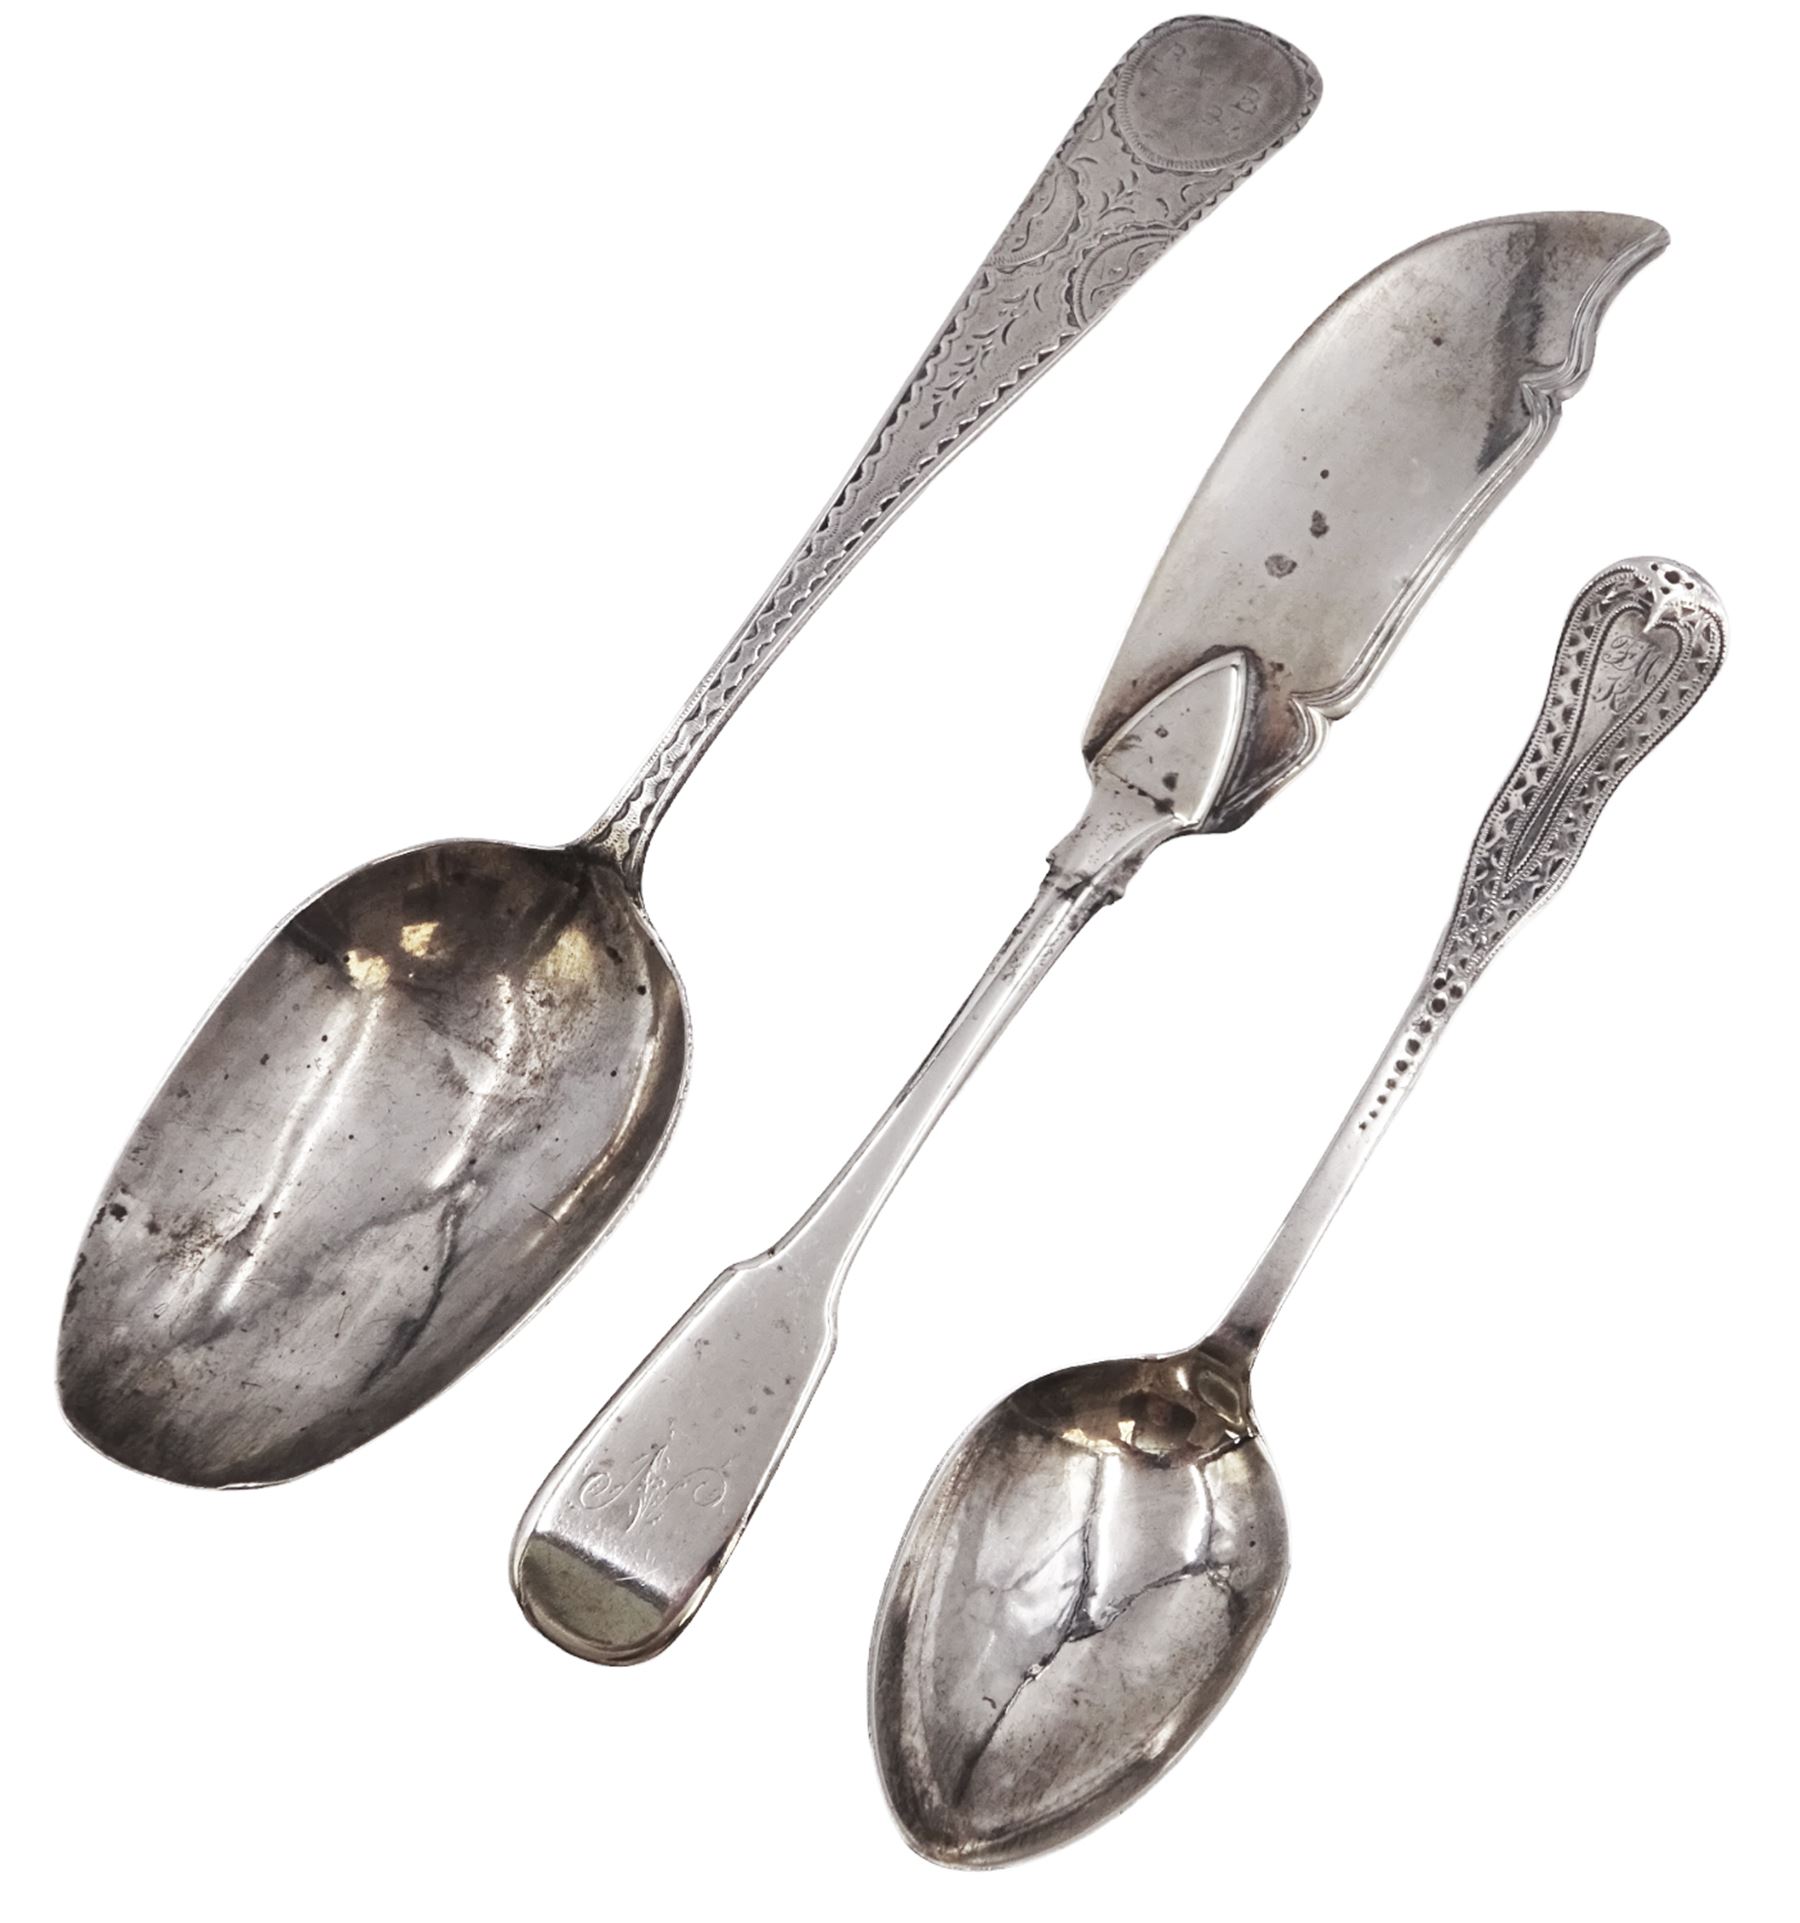 English silver table spoon